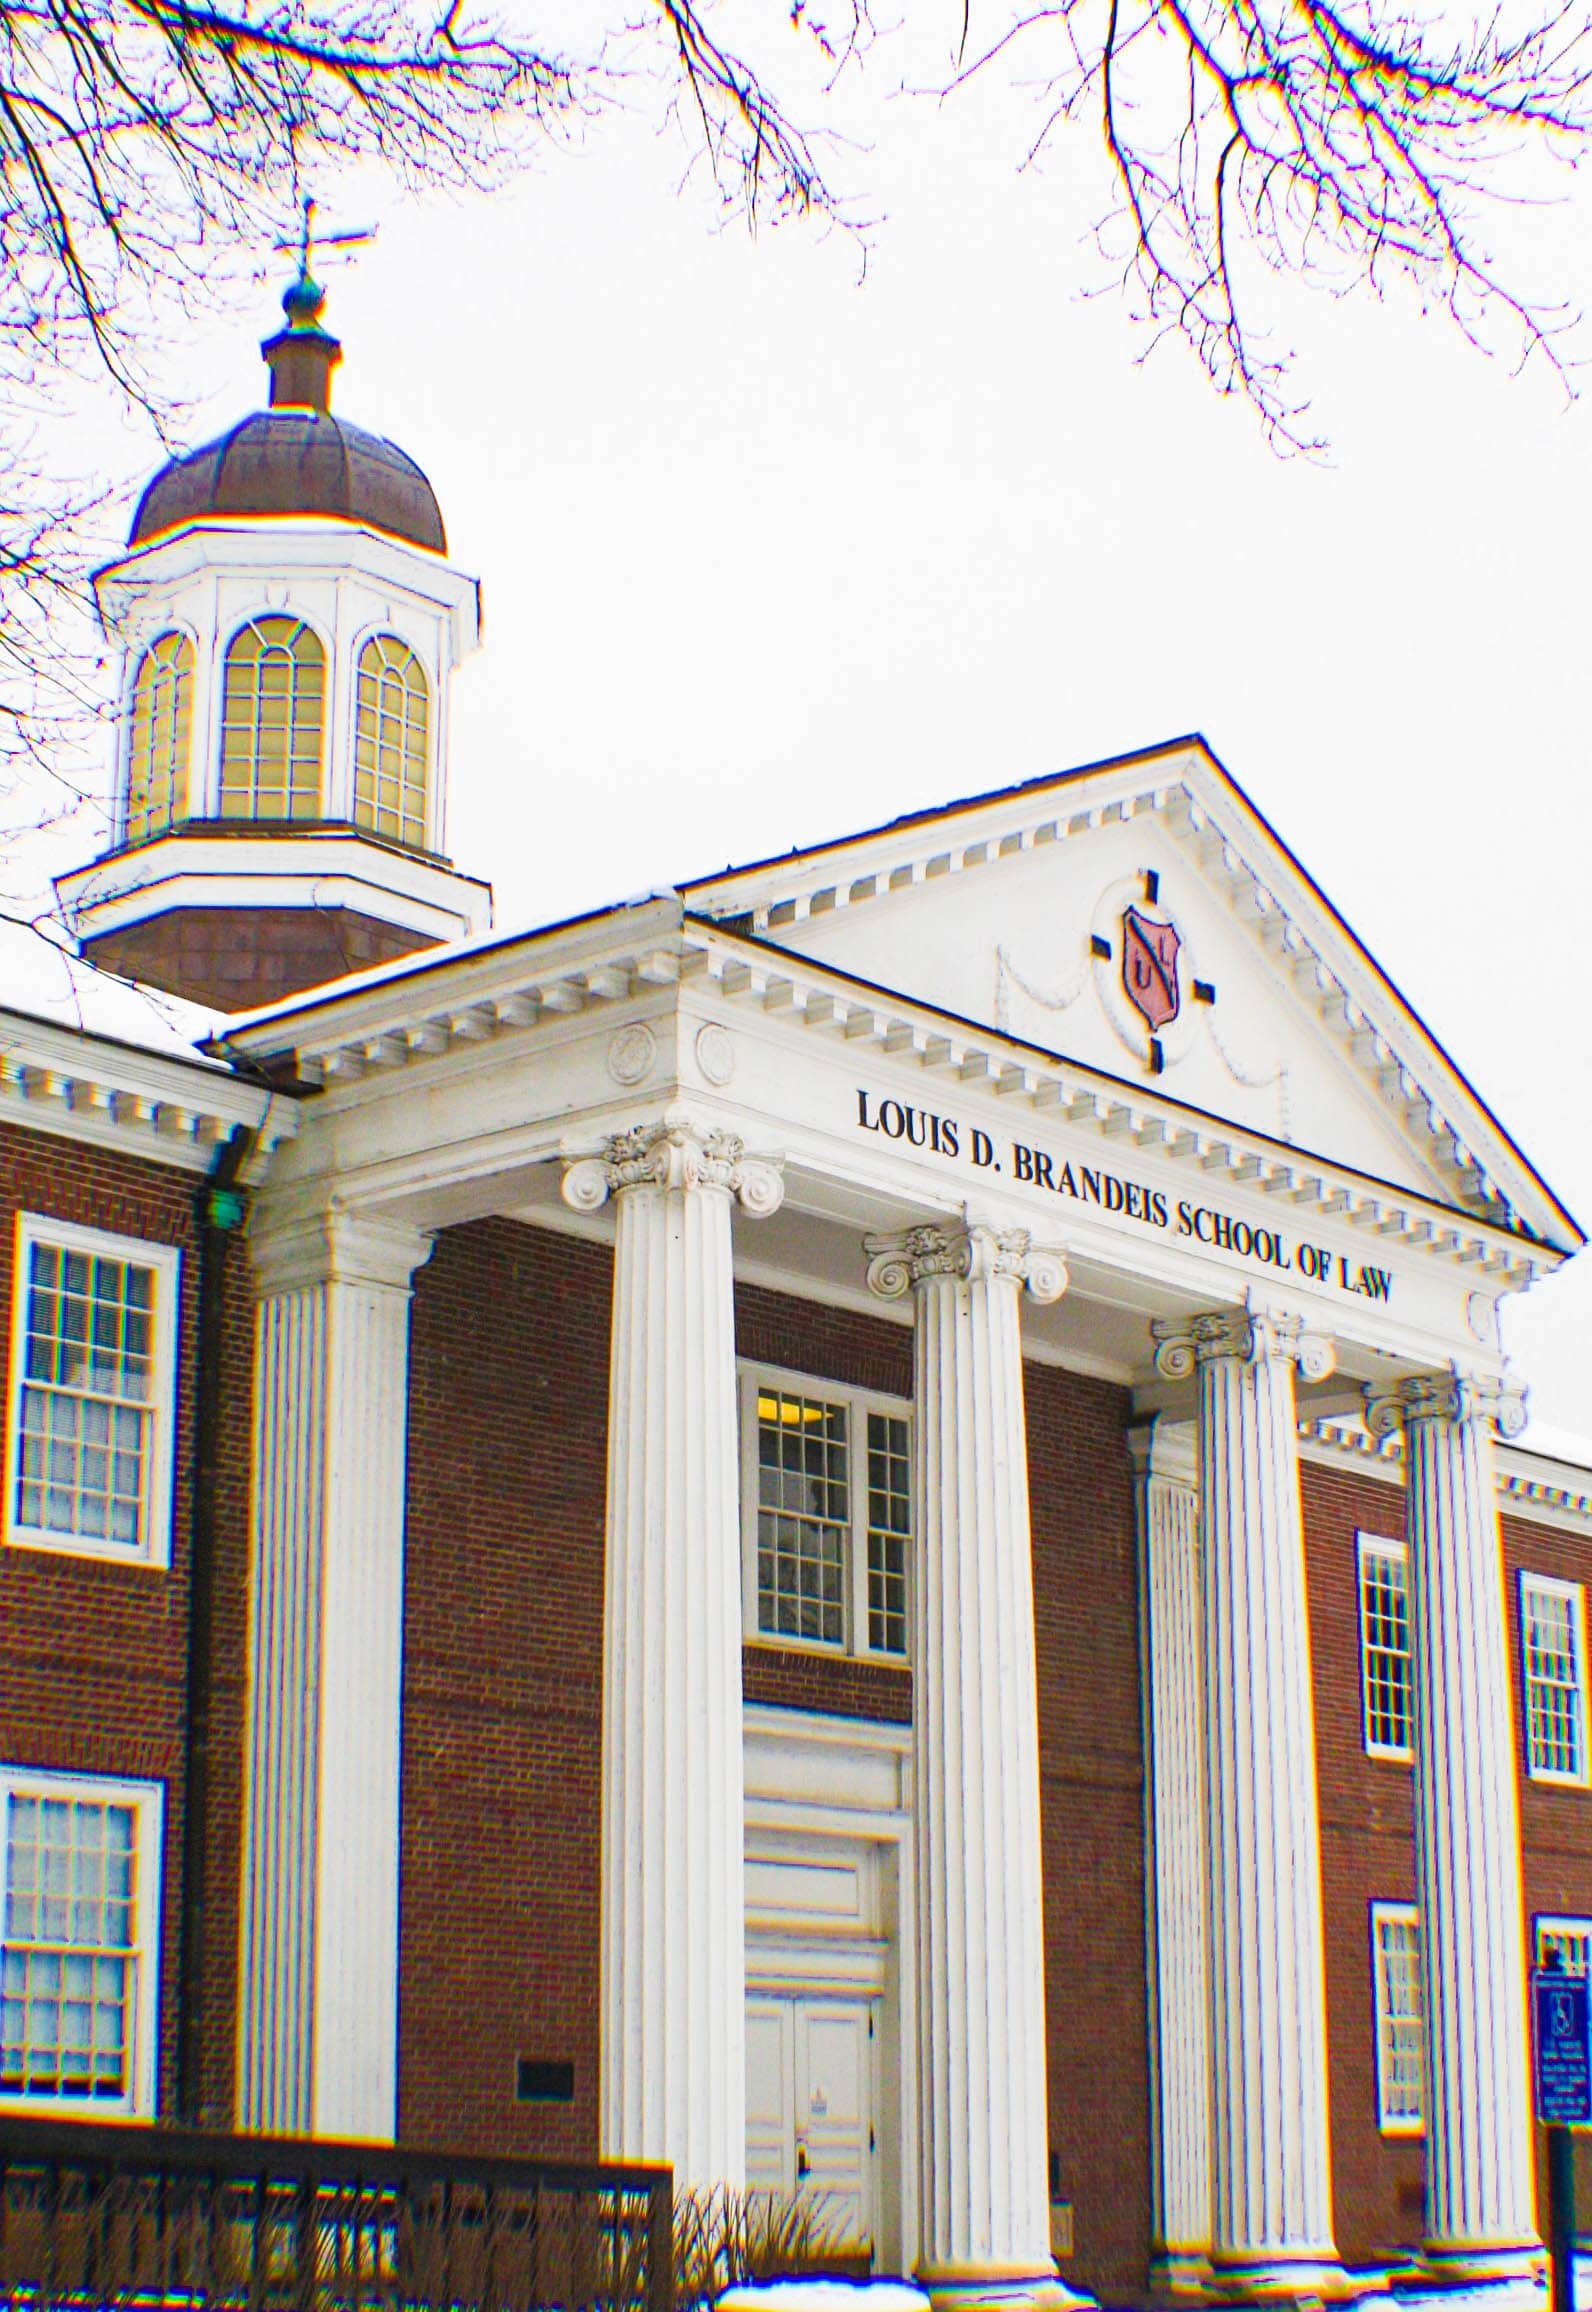 Student Bar Association - University of Louisville Brandeis School of Law